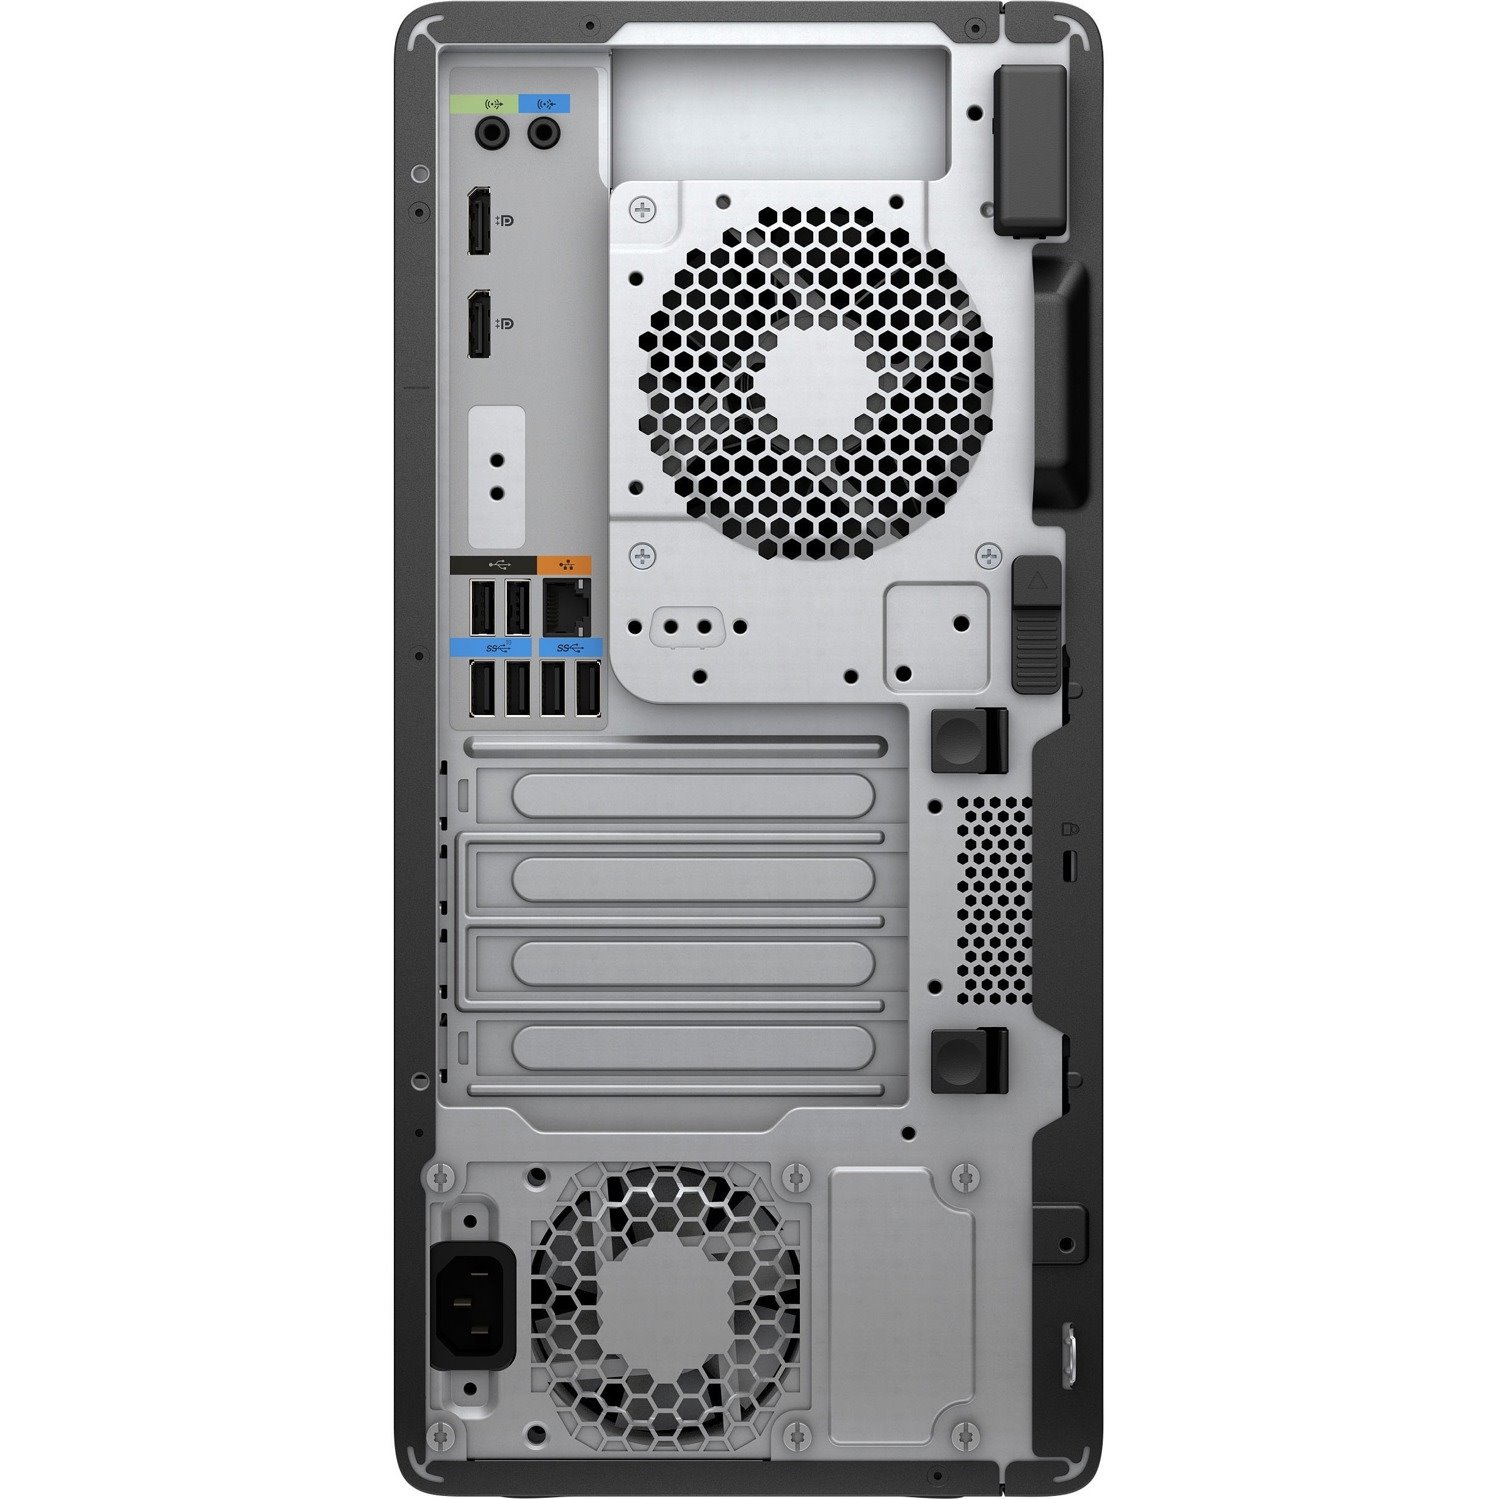 HP Z2 G5 Workstation - 1 x Intel Core i7 10th Gen i7-10700K - 16 GB - 512 GB SSD - Tower - Black